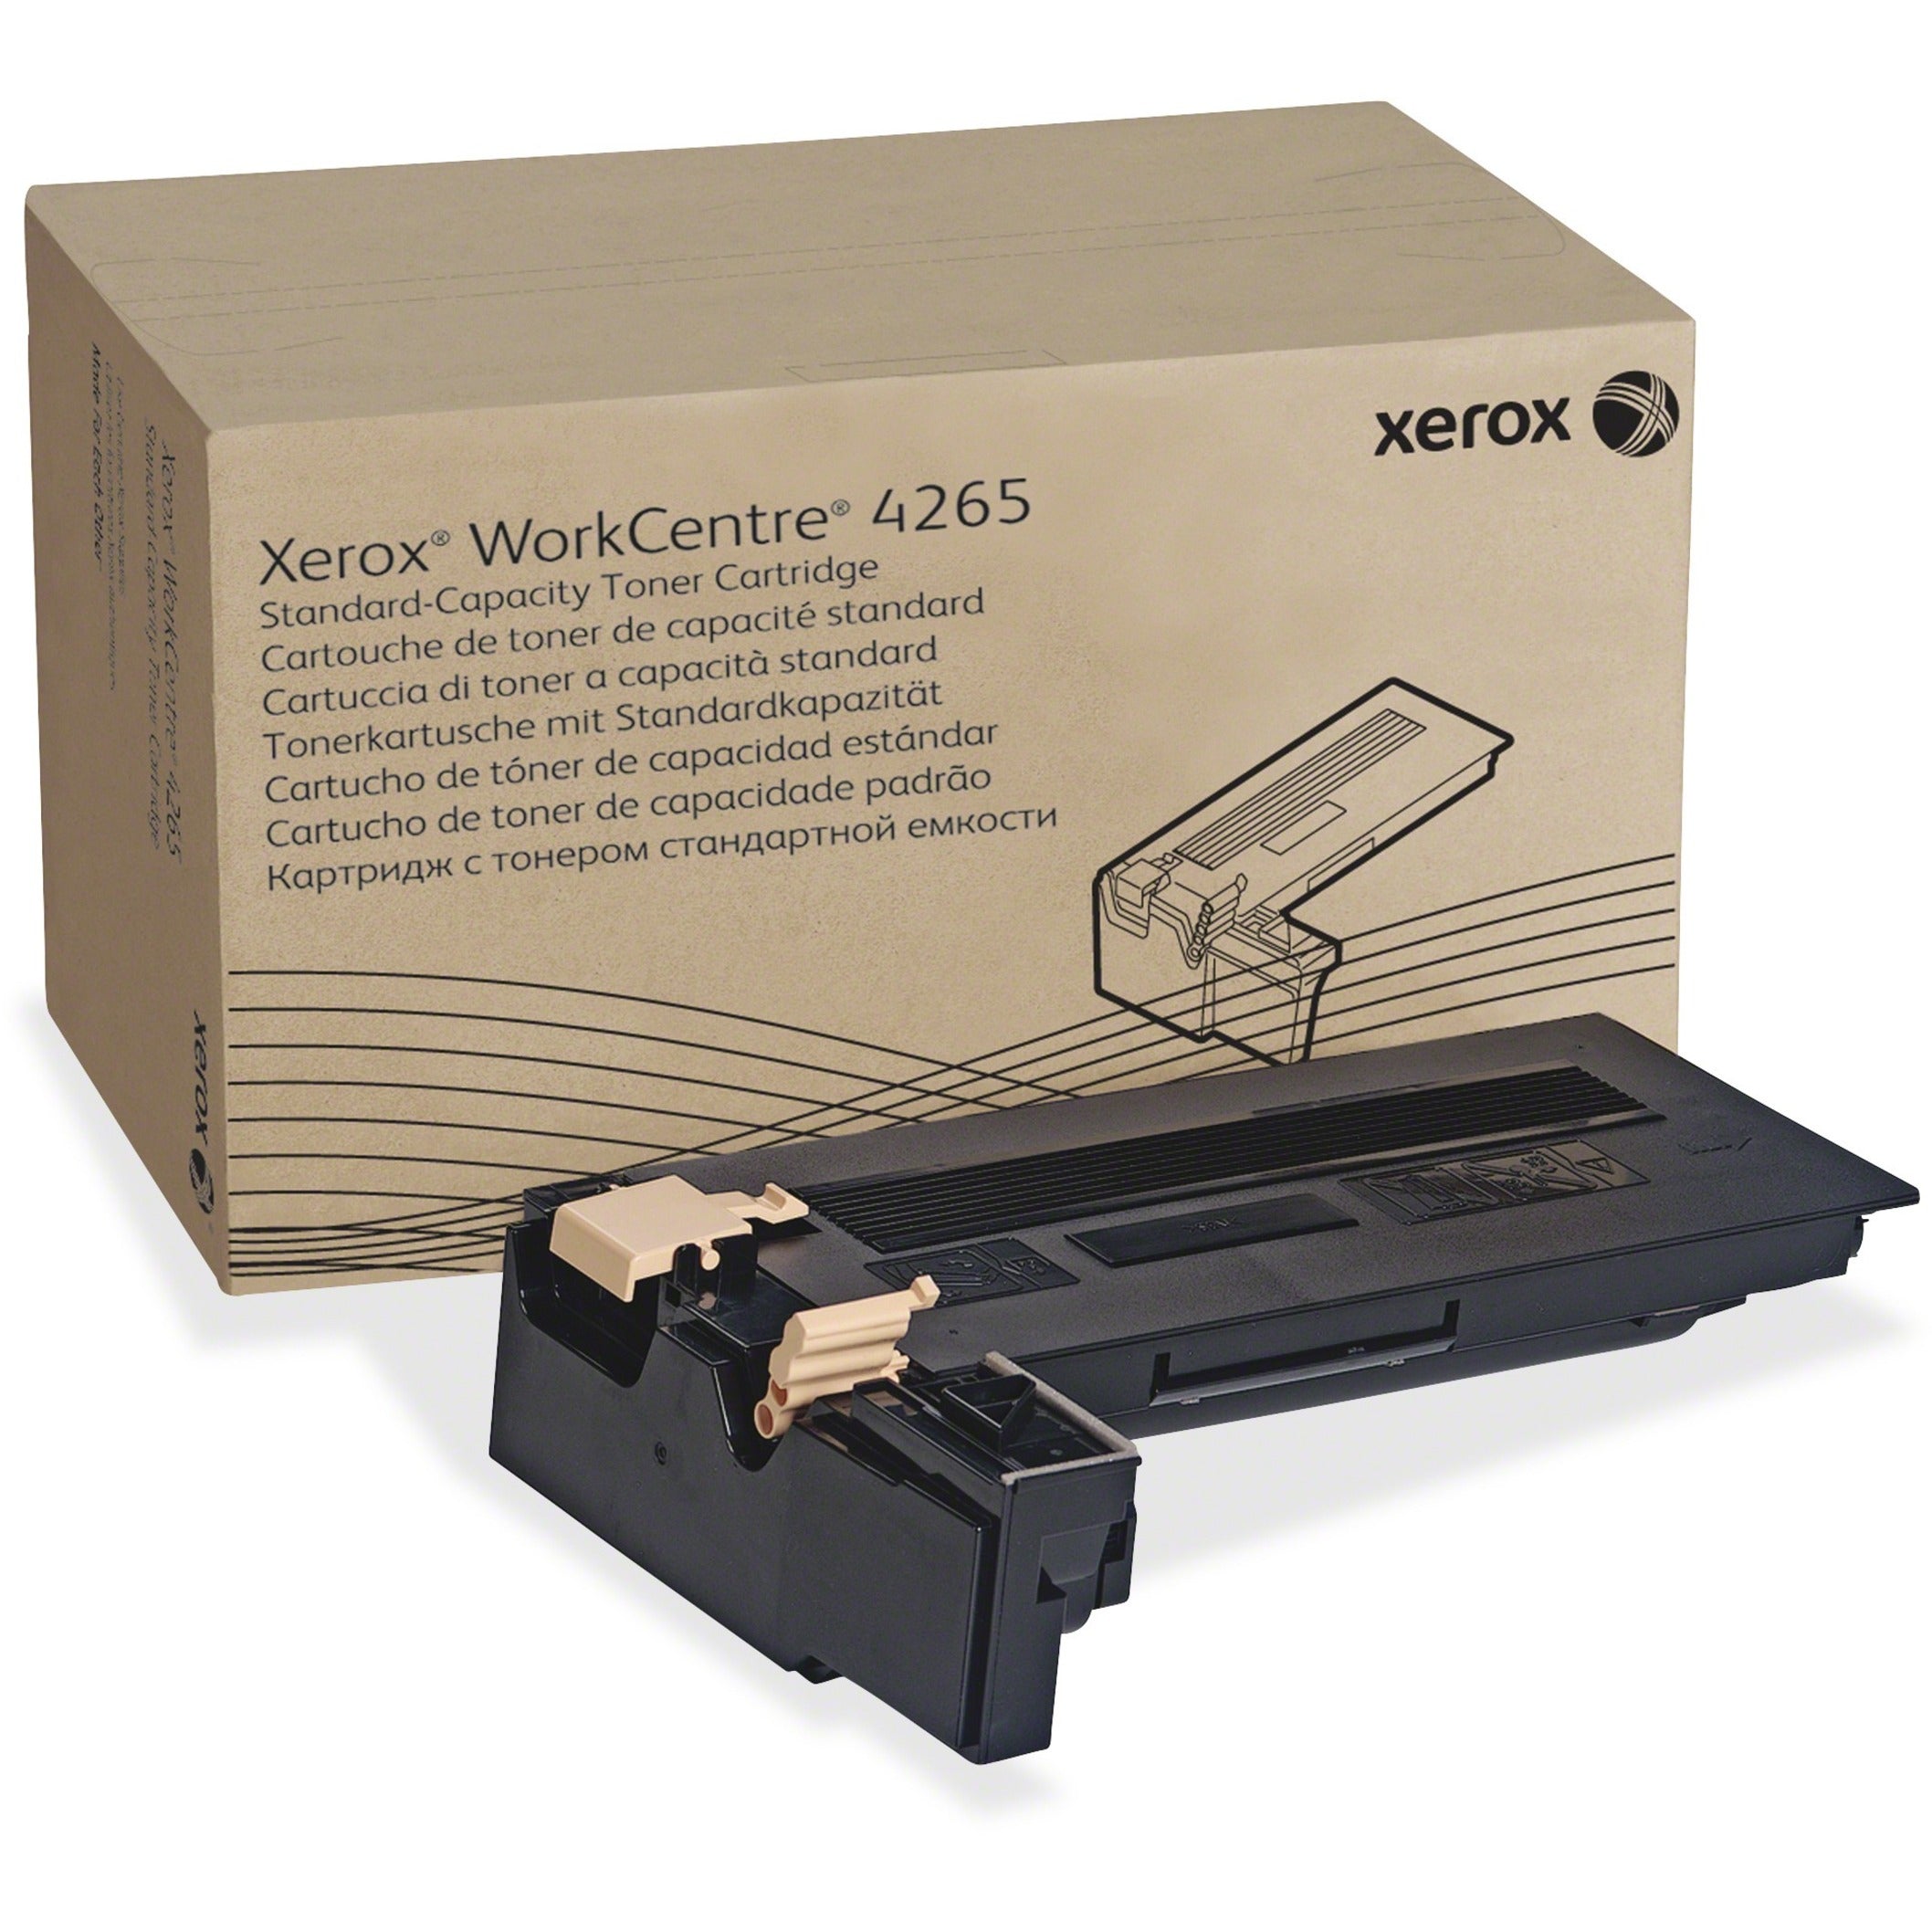 Xerox 106R03104 WC Toner Cartridge, 10000 Page Yield, Black, for Xerox WorkCentre 4265 Printer